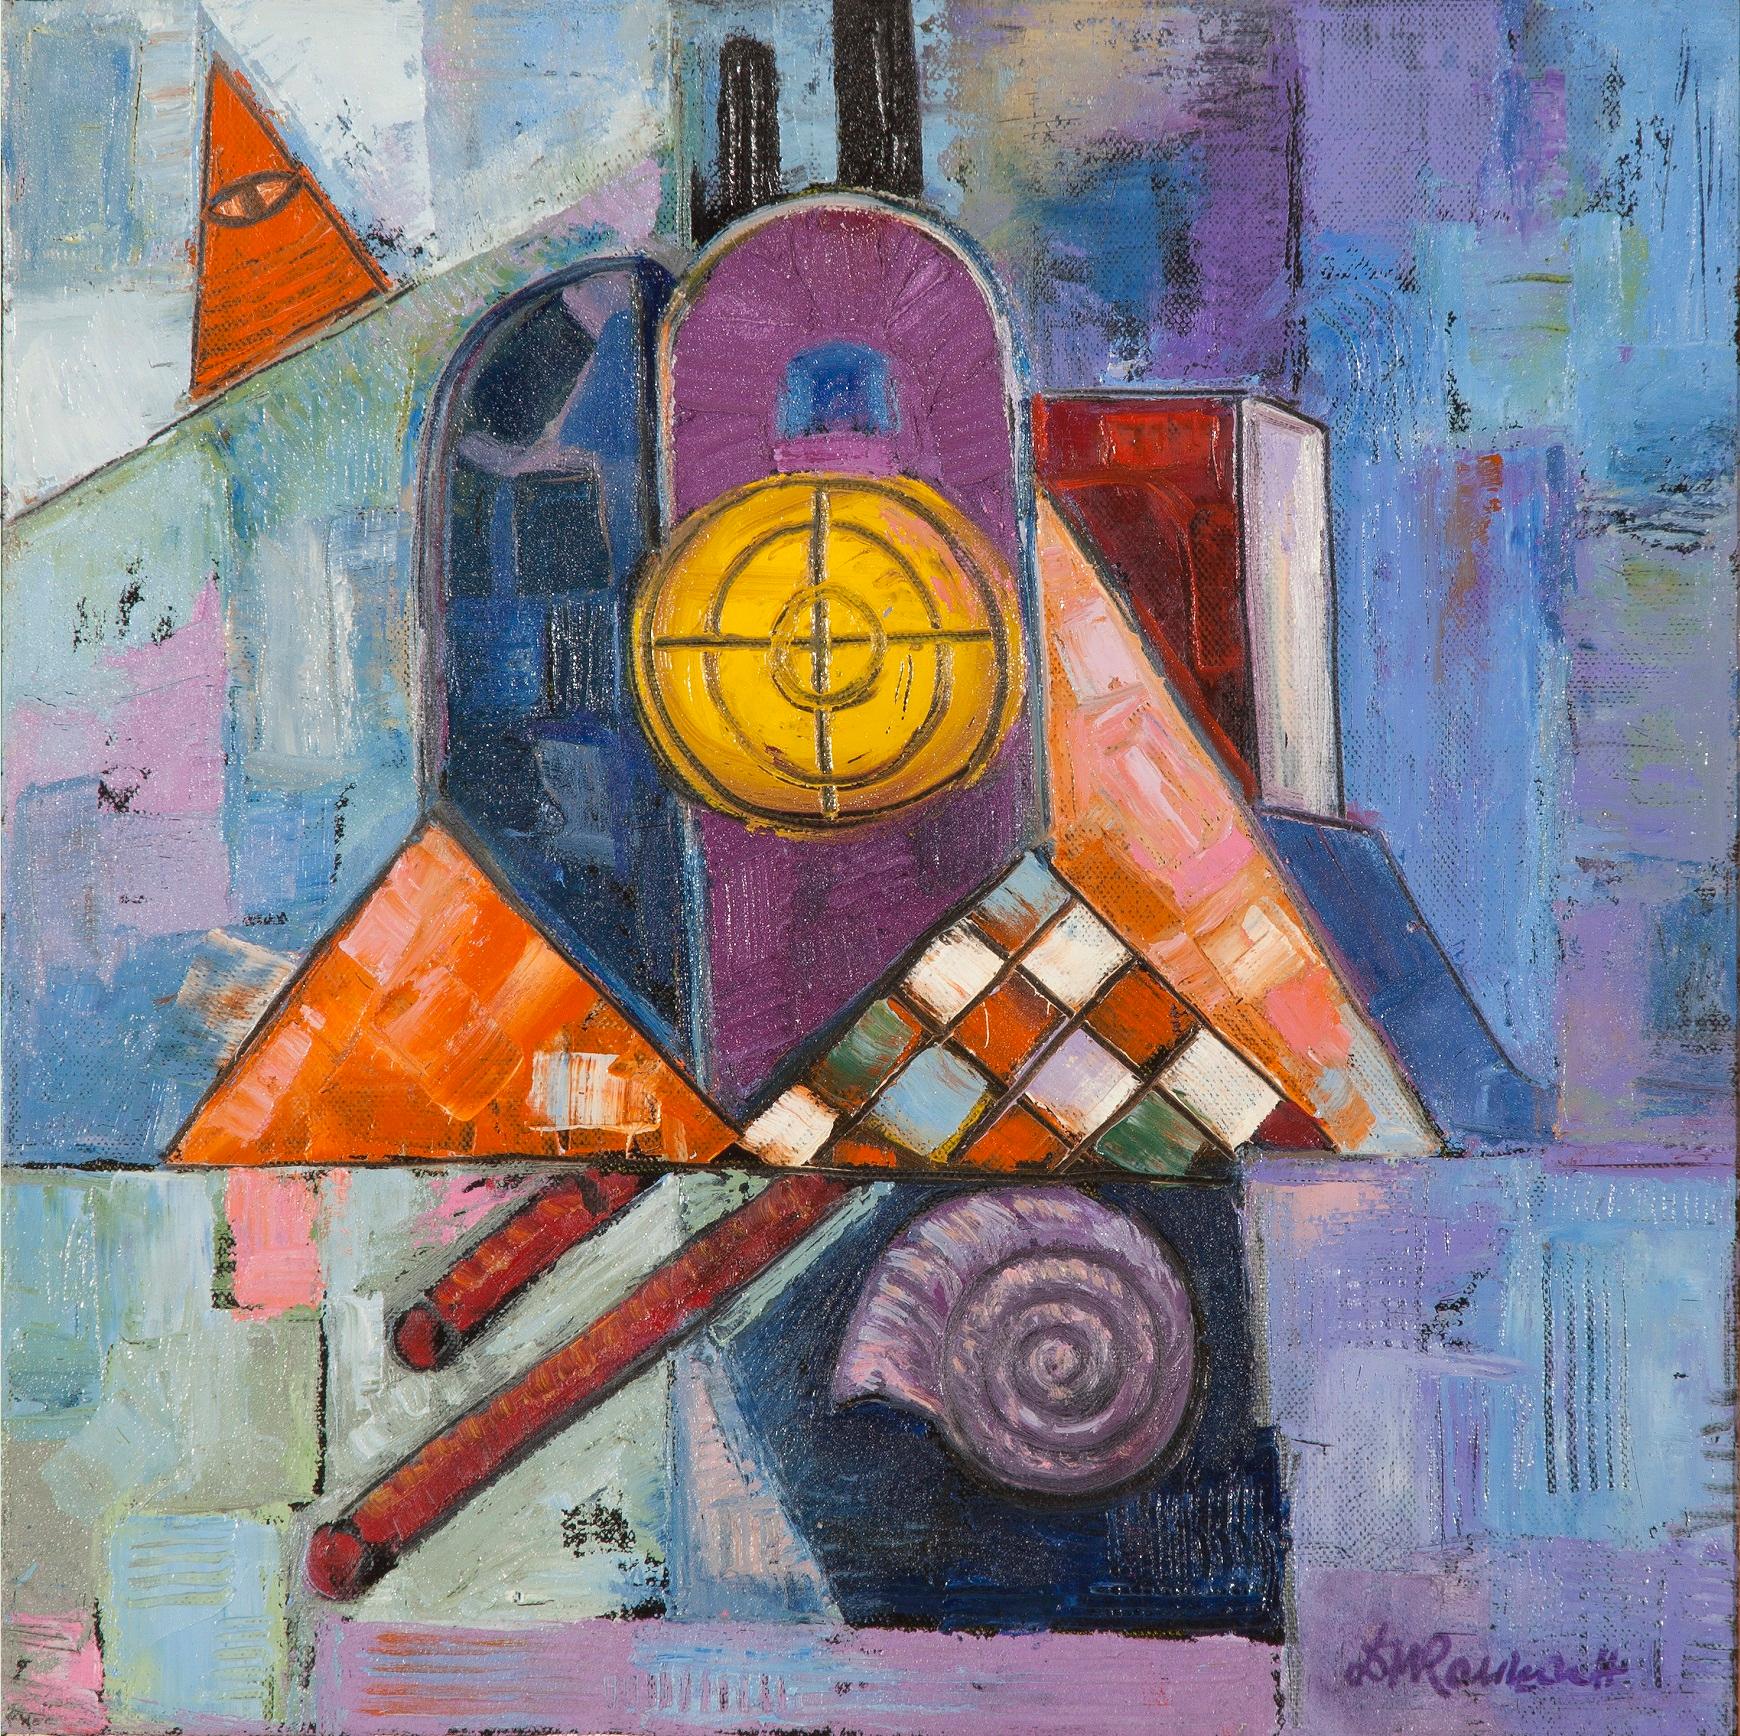 Dimitar Mitov - Komshin  Abstract Painting - Purpose Abstract Oil Painting Blue Yellow Orange White Lilac Brown Black Pink 